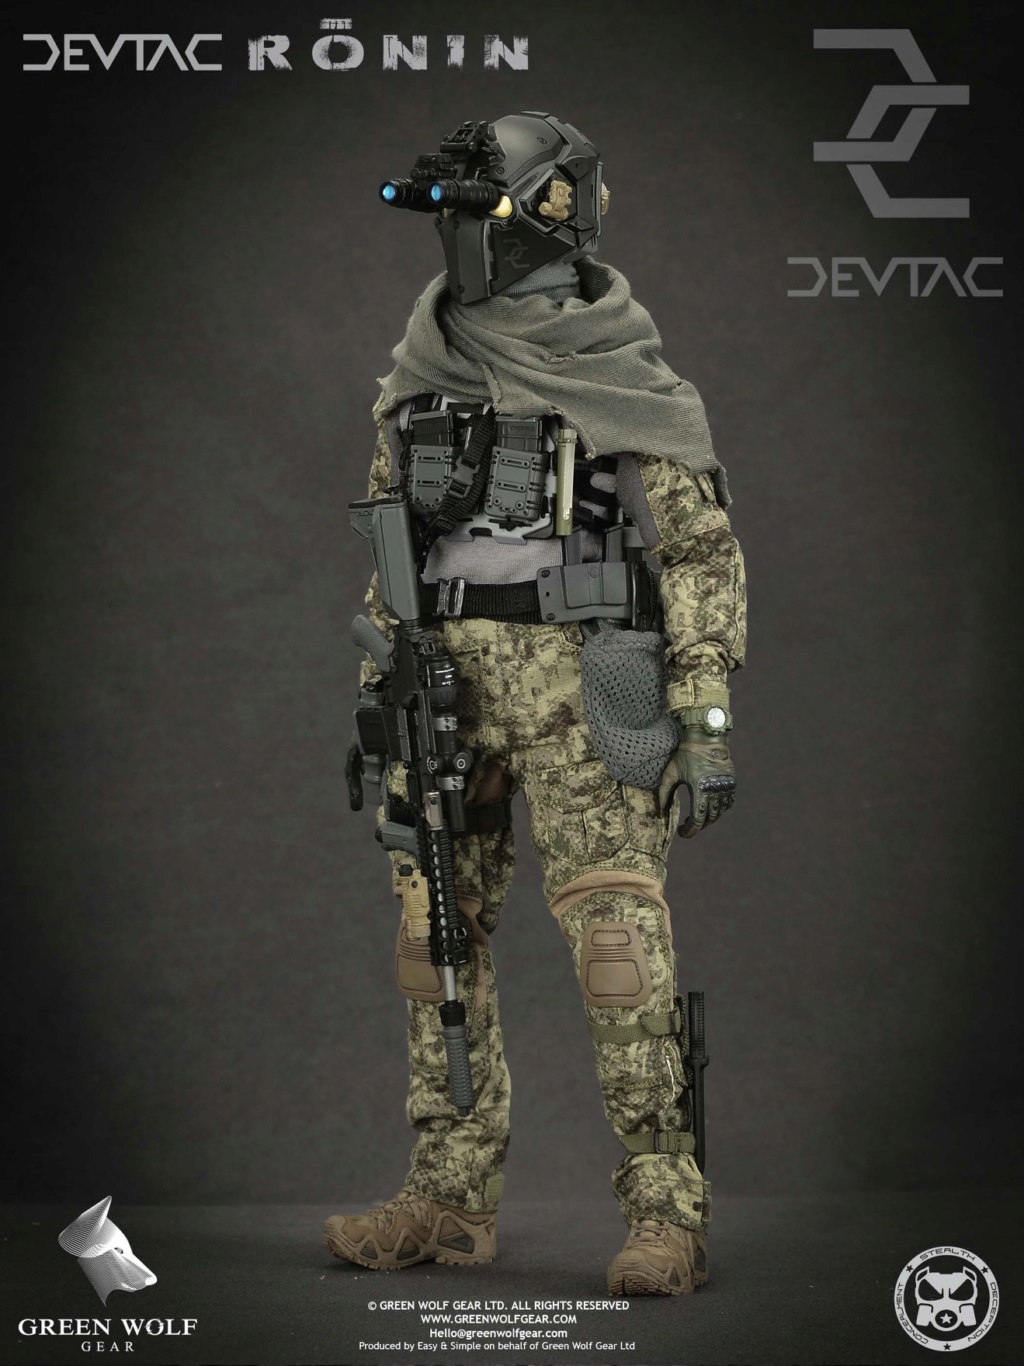 DEVTAC - NEW PRODUCT: Green Wolf Gear DEVTAC Ronin 1/6 Action Figure (VS2434P) 262